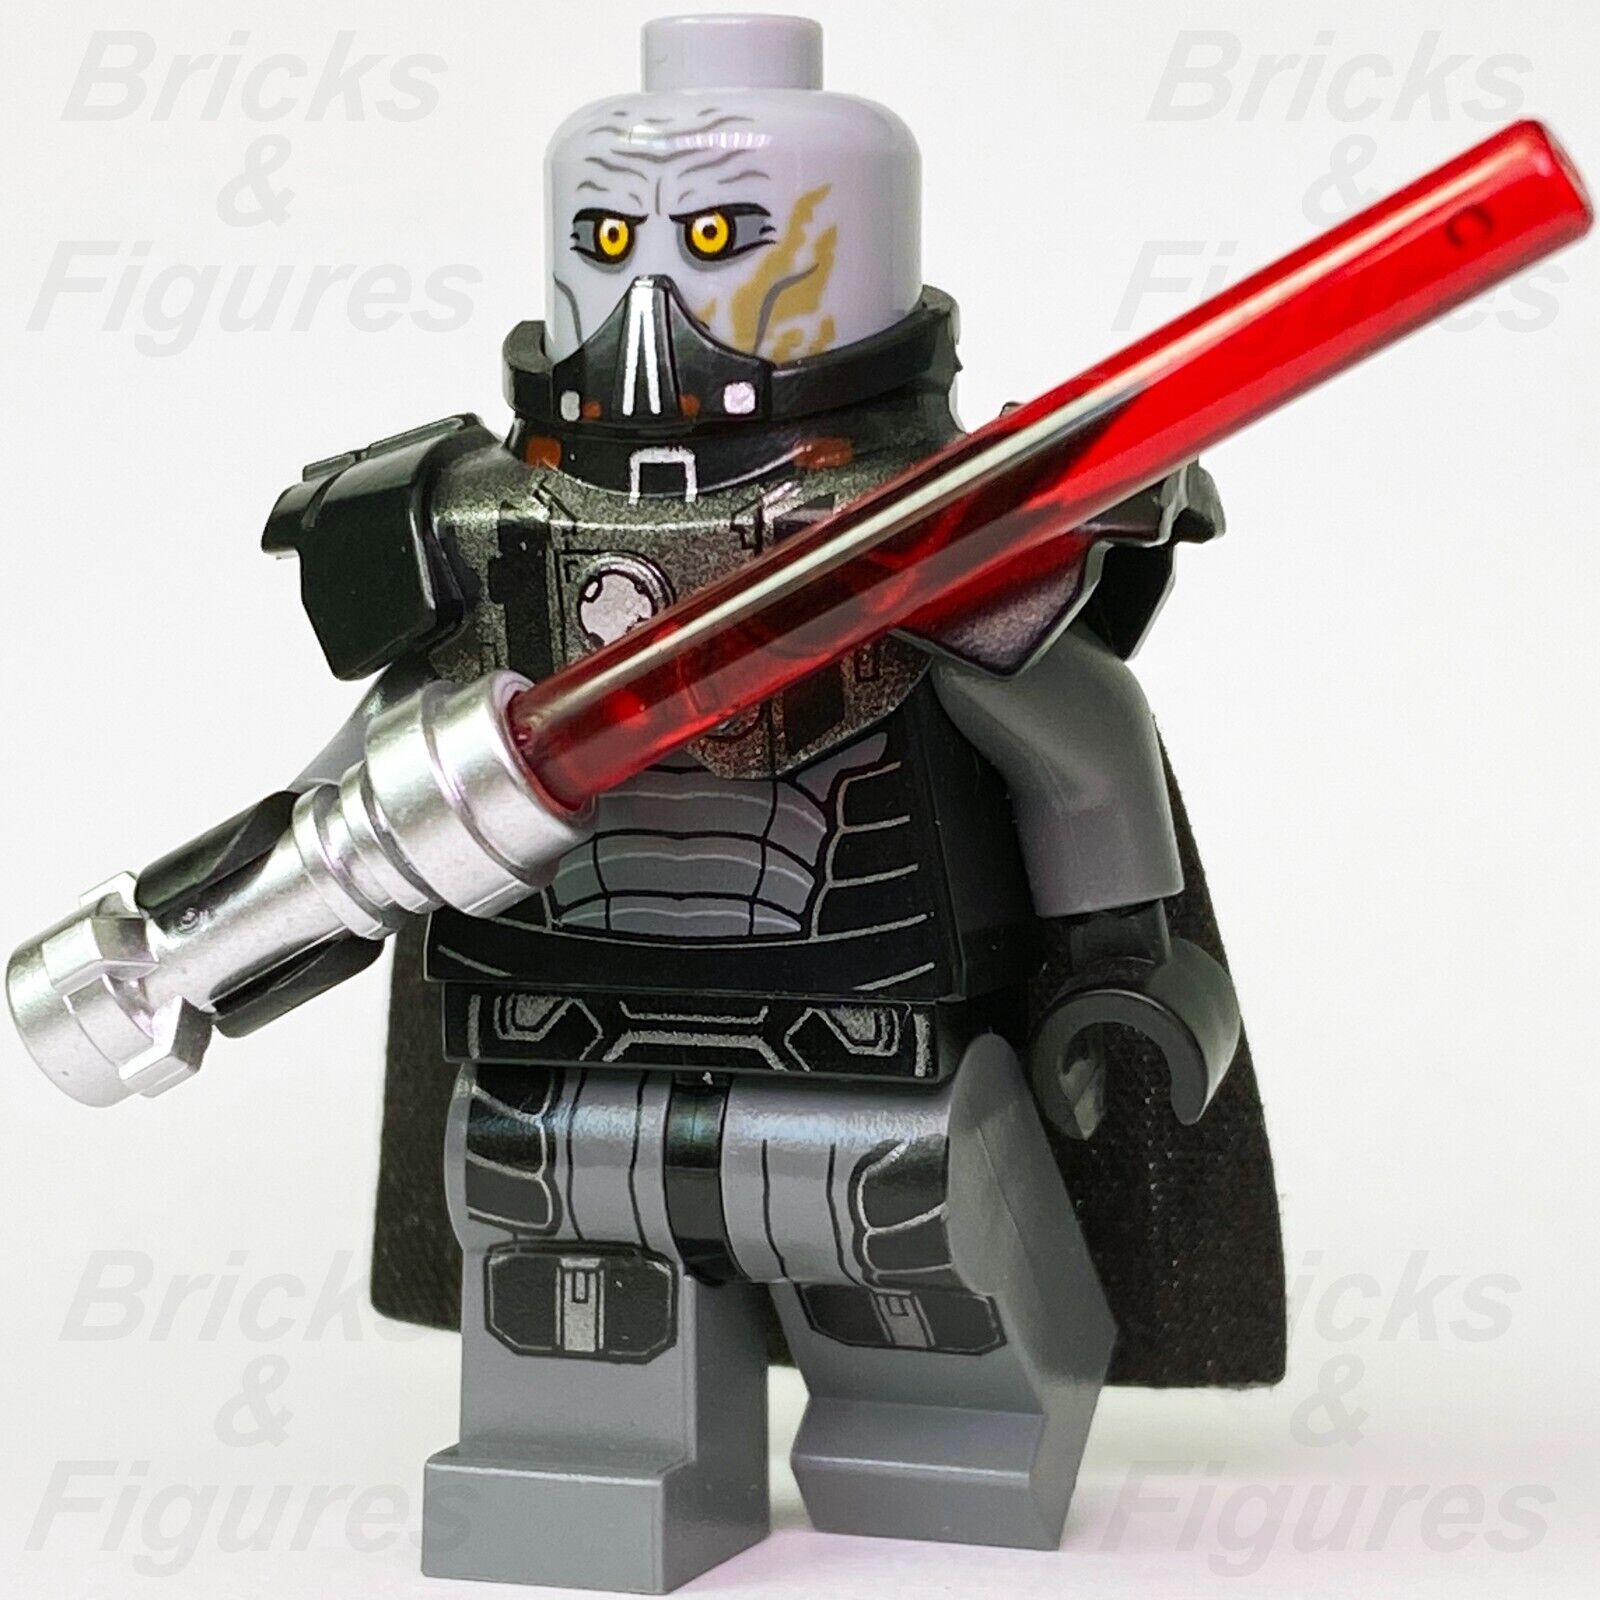 LEGO Star Wars Darth Malgus Minifigure The Old Republic Sith Lord 9500 sw0413